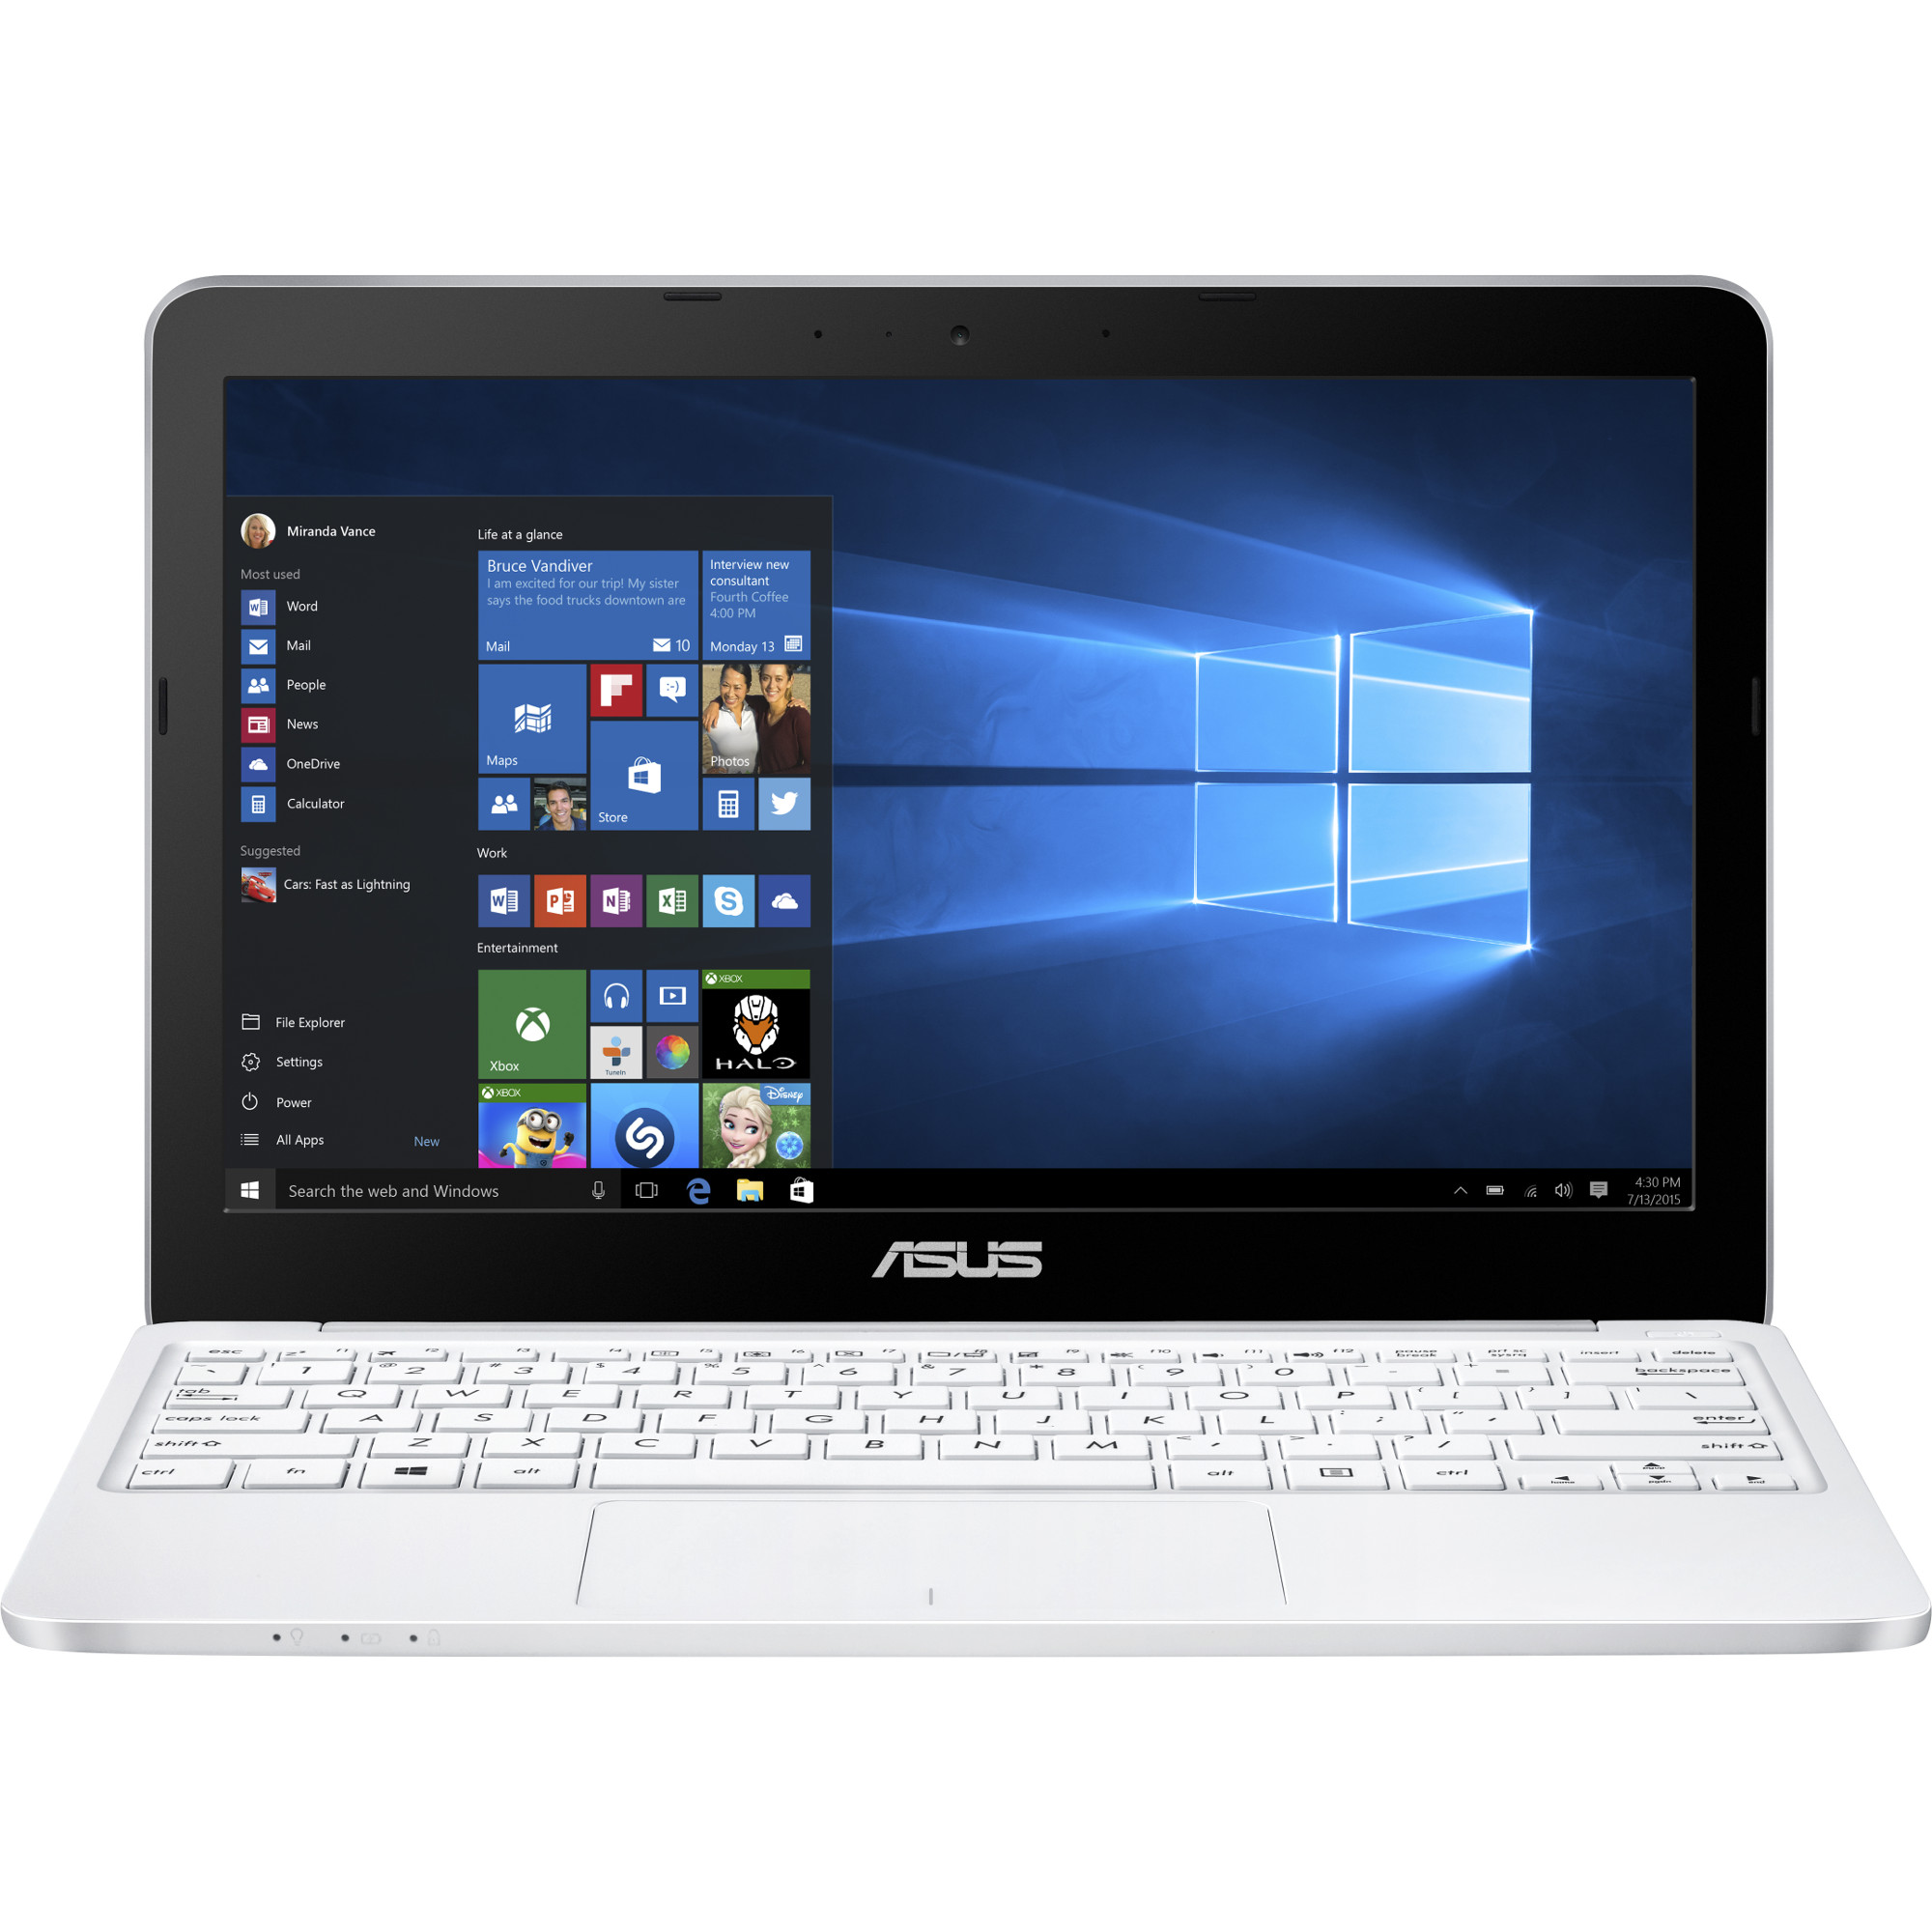 Laptop ASUS E200HA, Intel Atom X5-Z8350, 2GB DDR3, eMMC 32GB, Intel HD Graphics, Windows 10